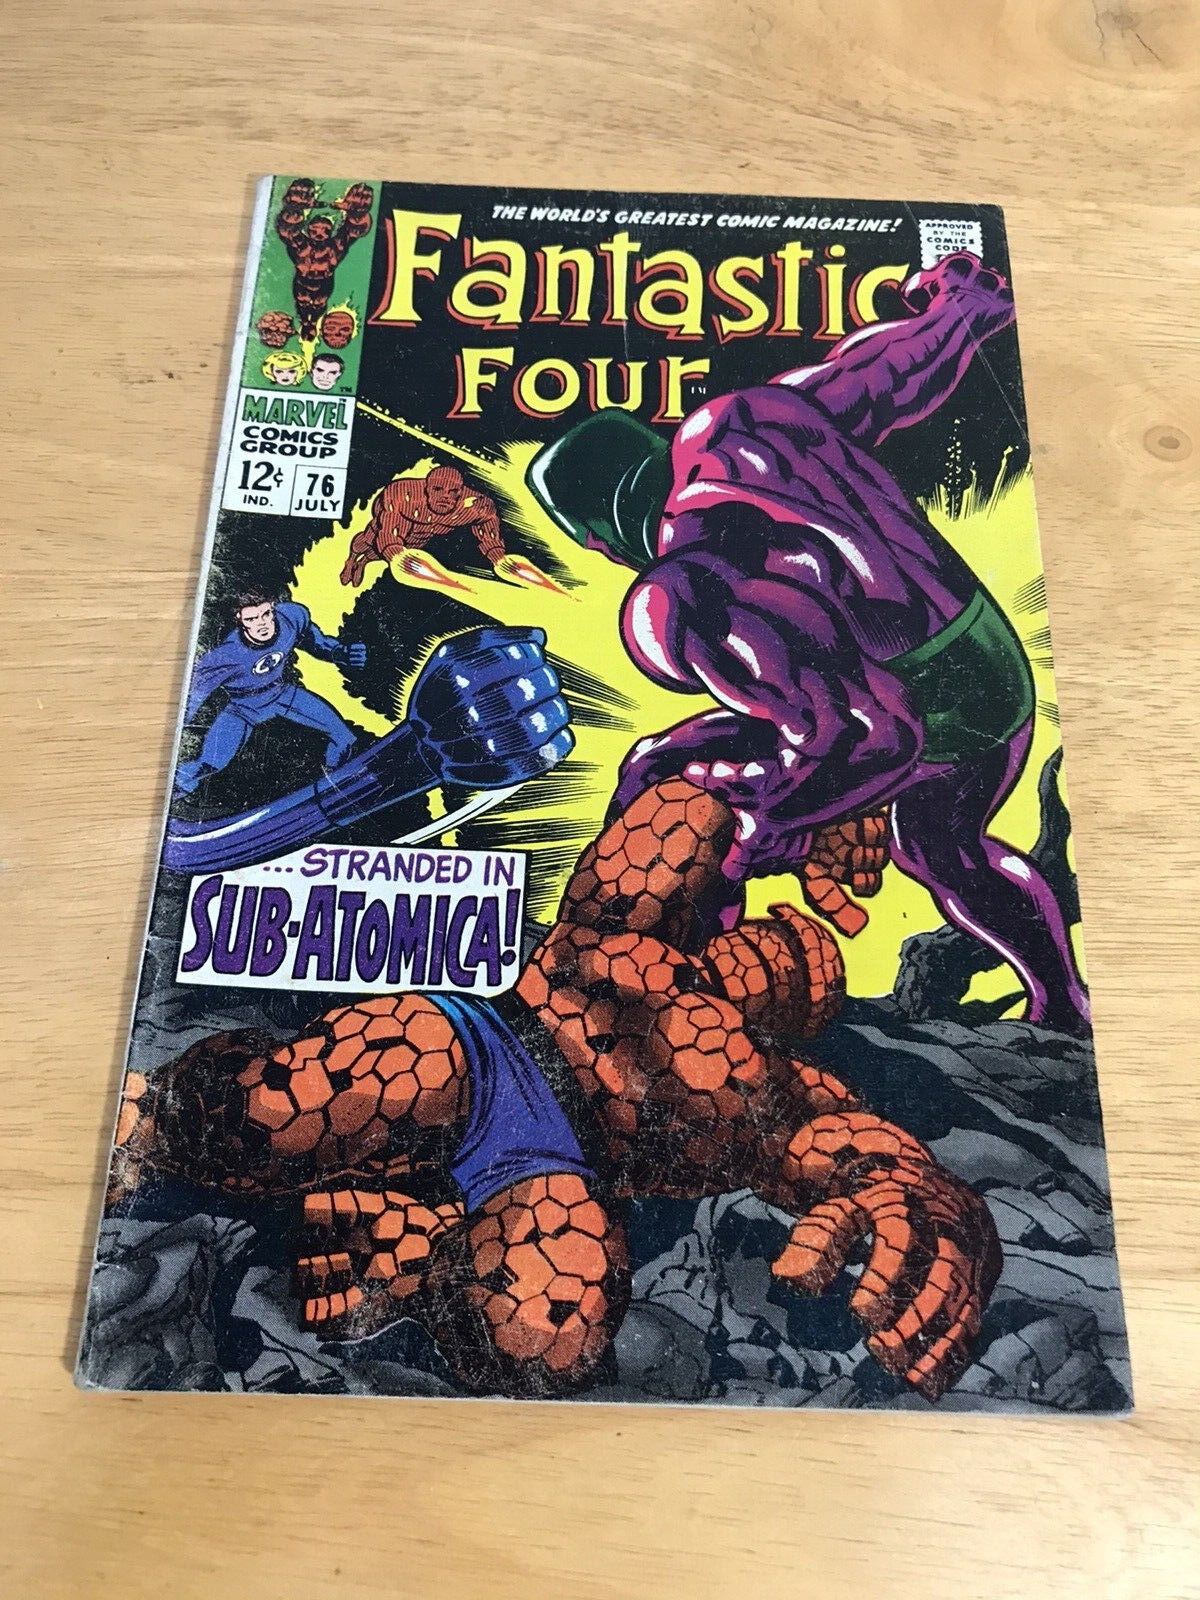 Fantastic Four #76 1968 Silver Surfer, Galactus, Psycho Man Jack Kirby/ Stan Lee